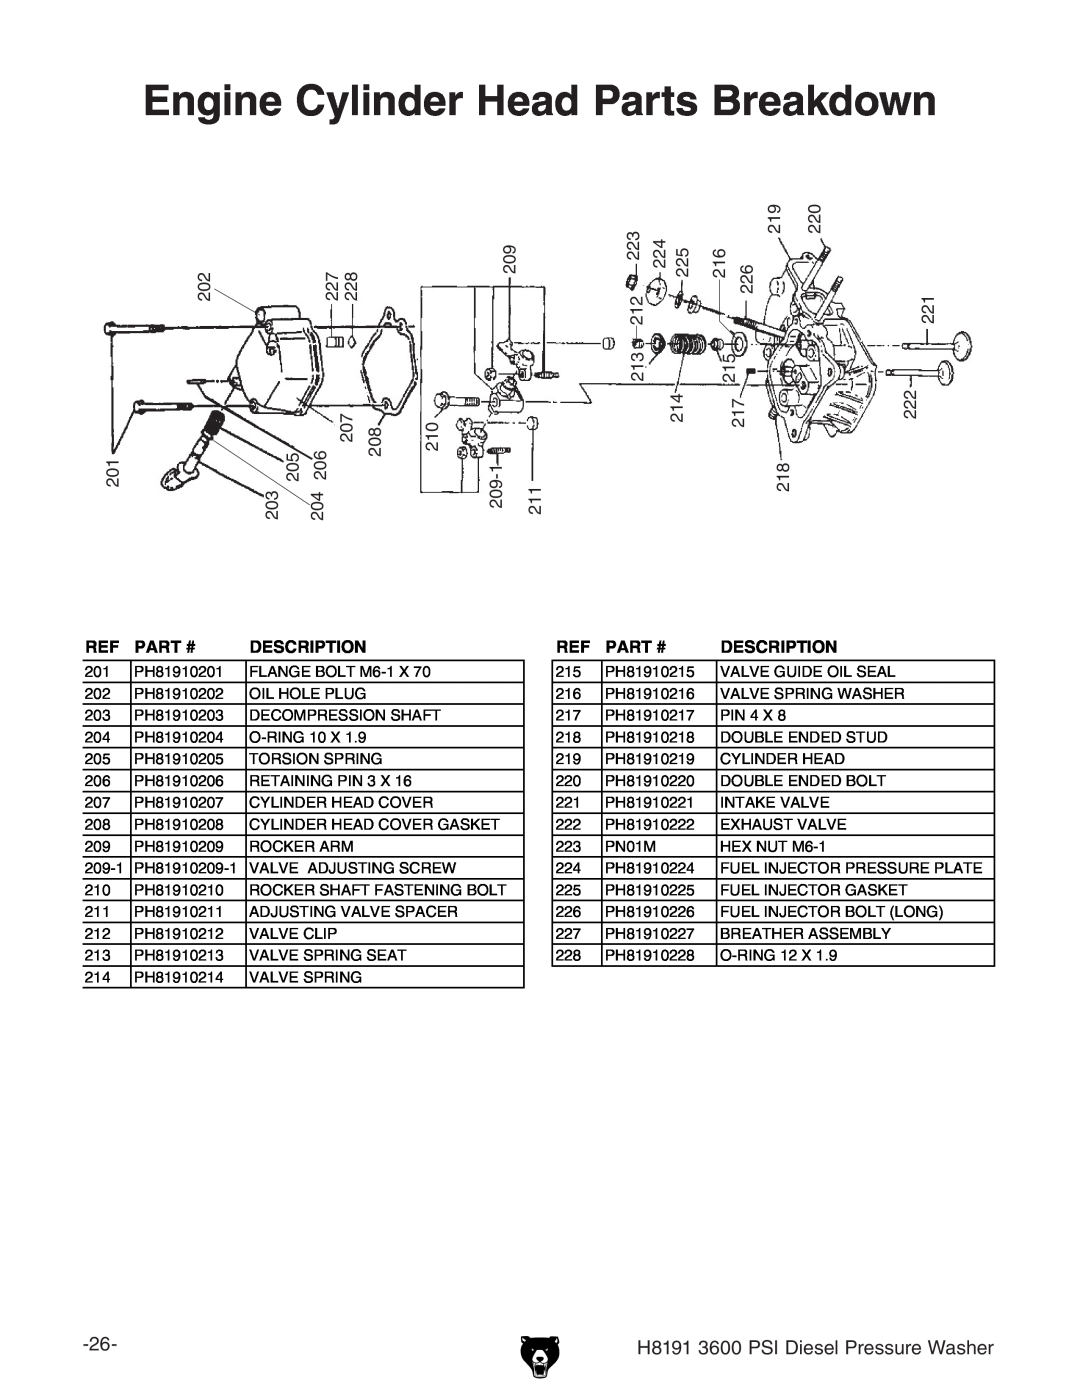 Grizzly manual Engine Cylinder Head Parts Breakdown, H8191 3600 PSI Diesel Pressure Washer, Part #, Description 